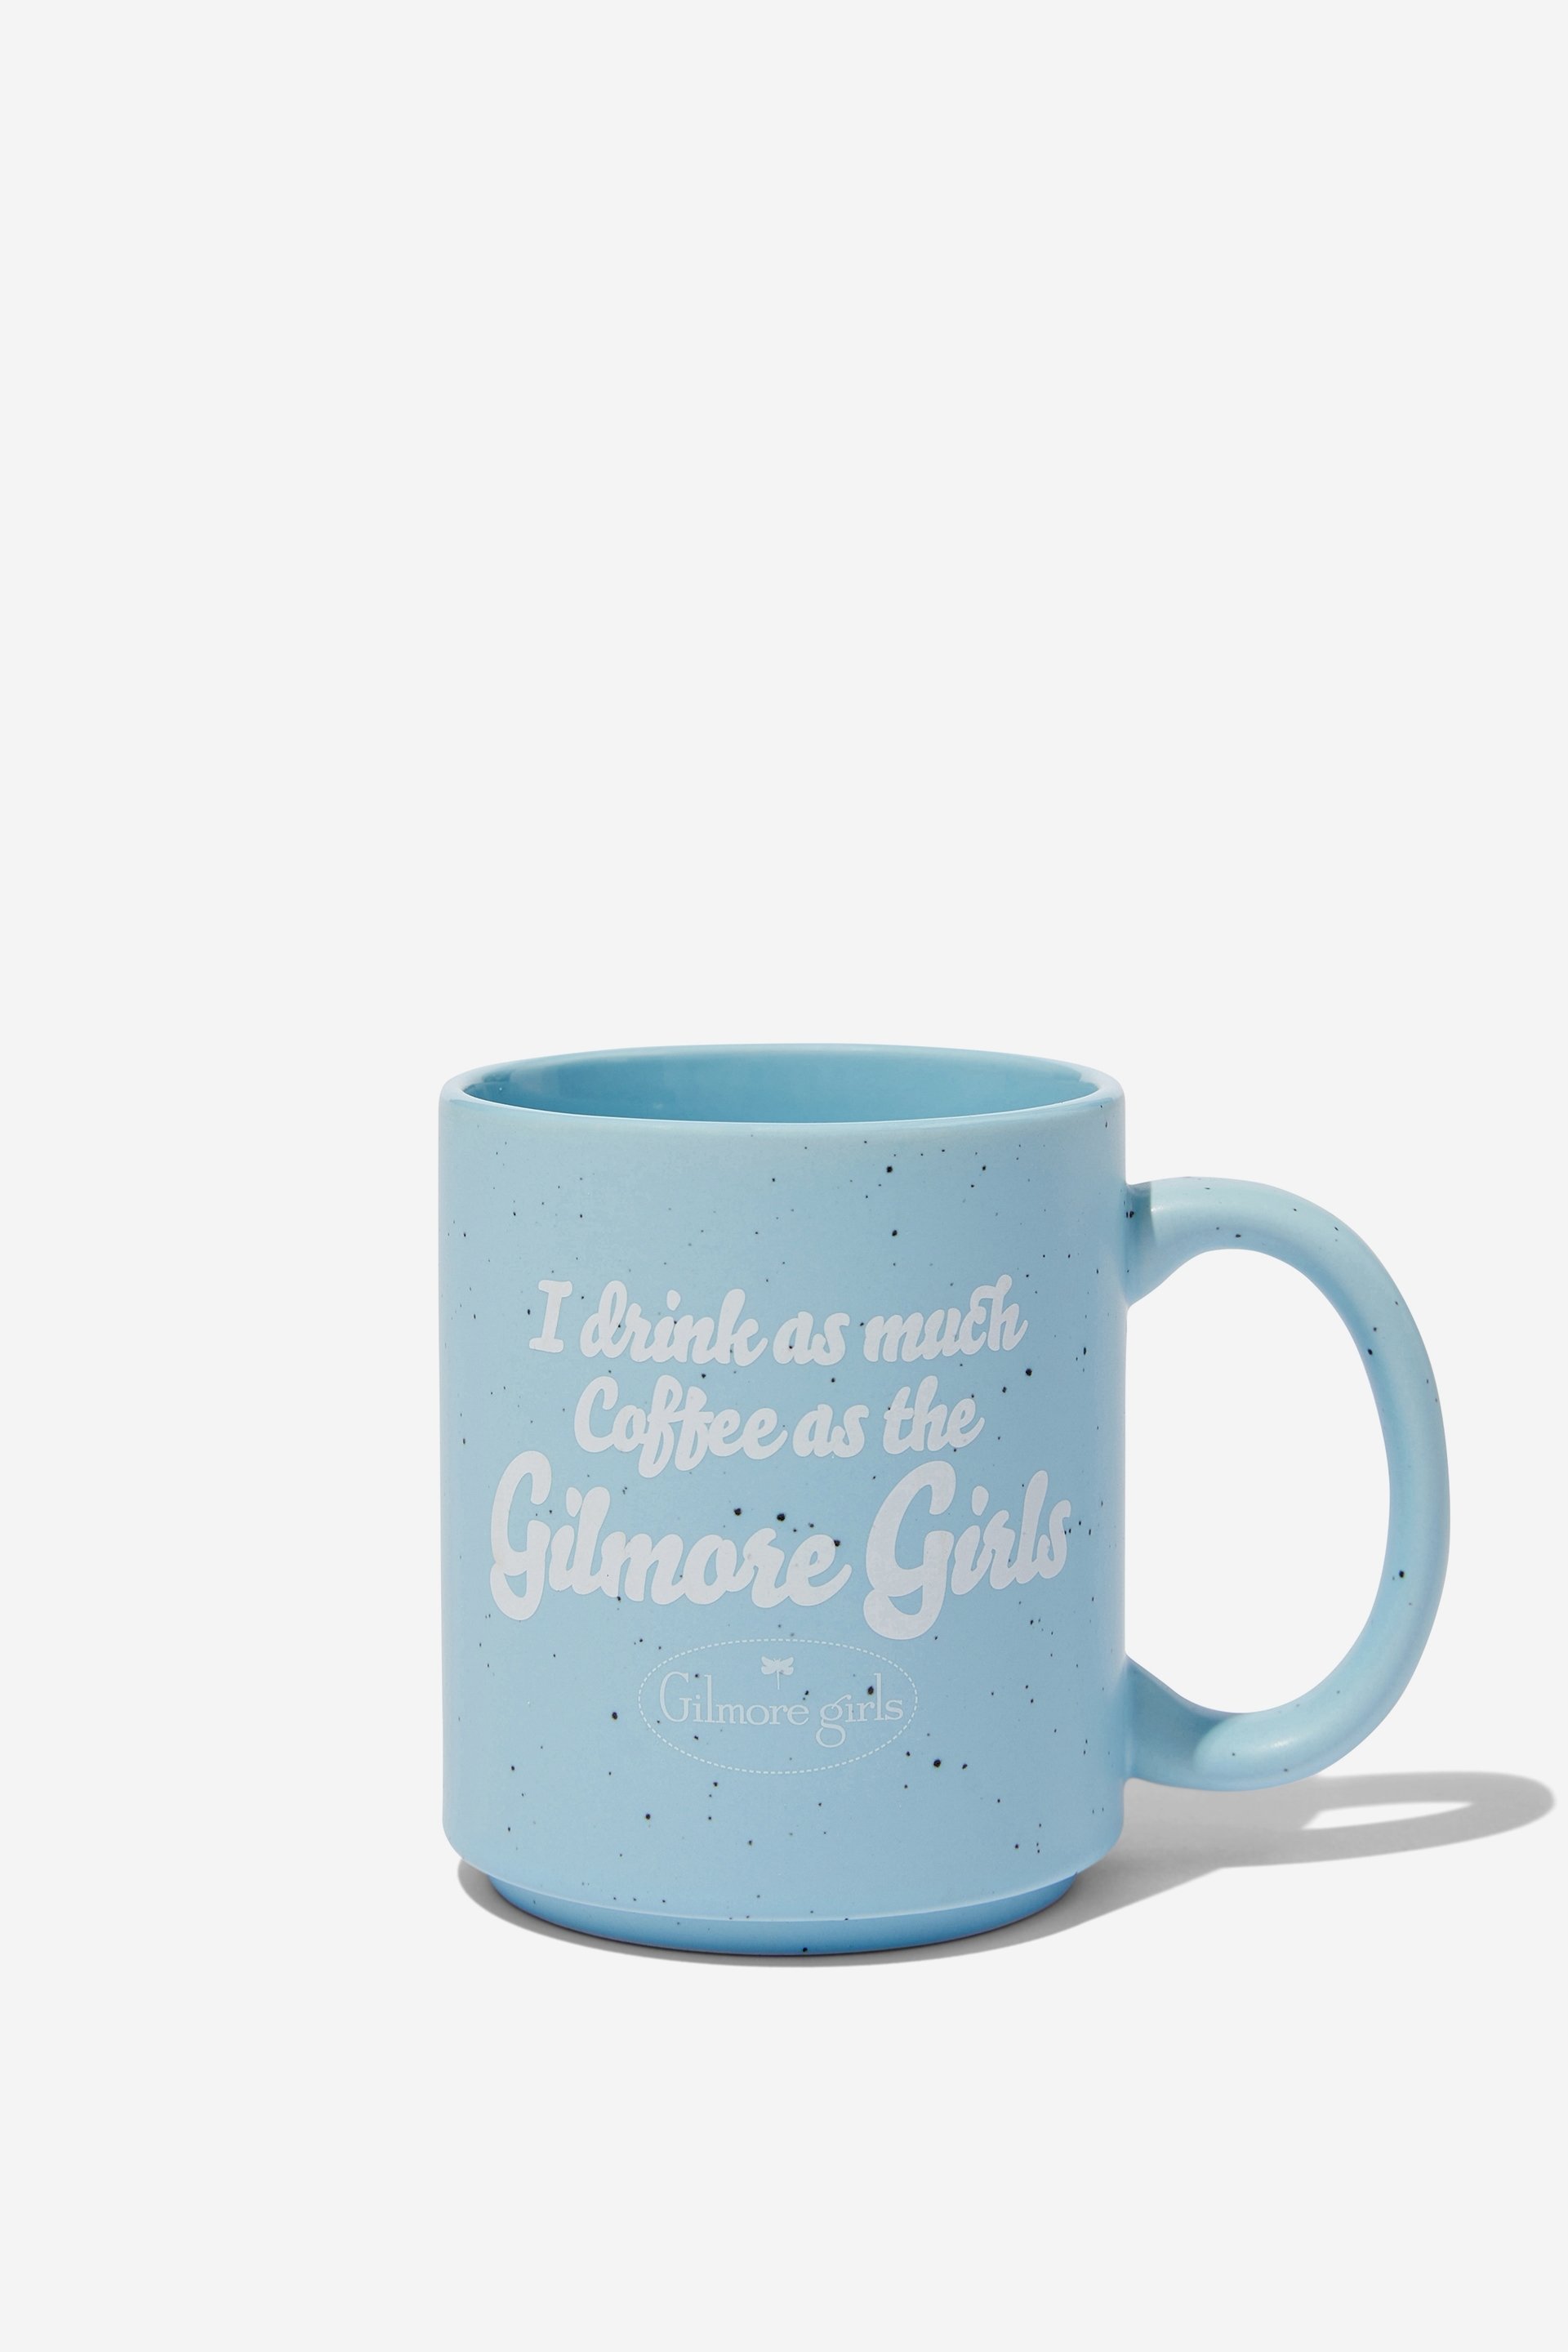 Typo - Gilmore Girls Daily Mug - Lcn wb gilmore girls blue speckle